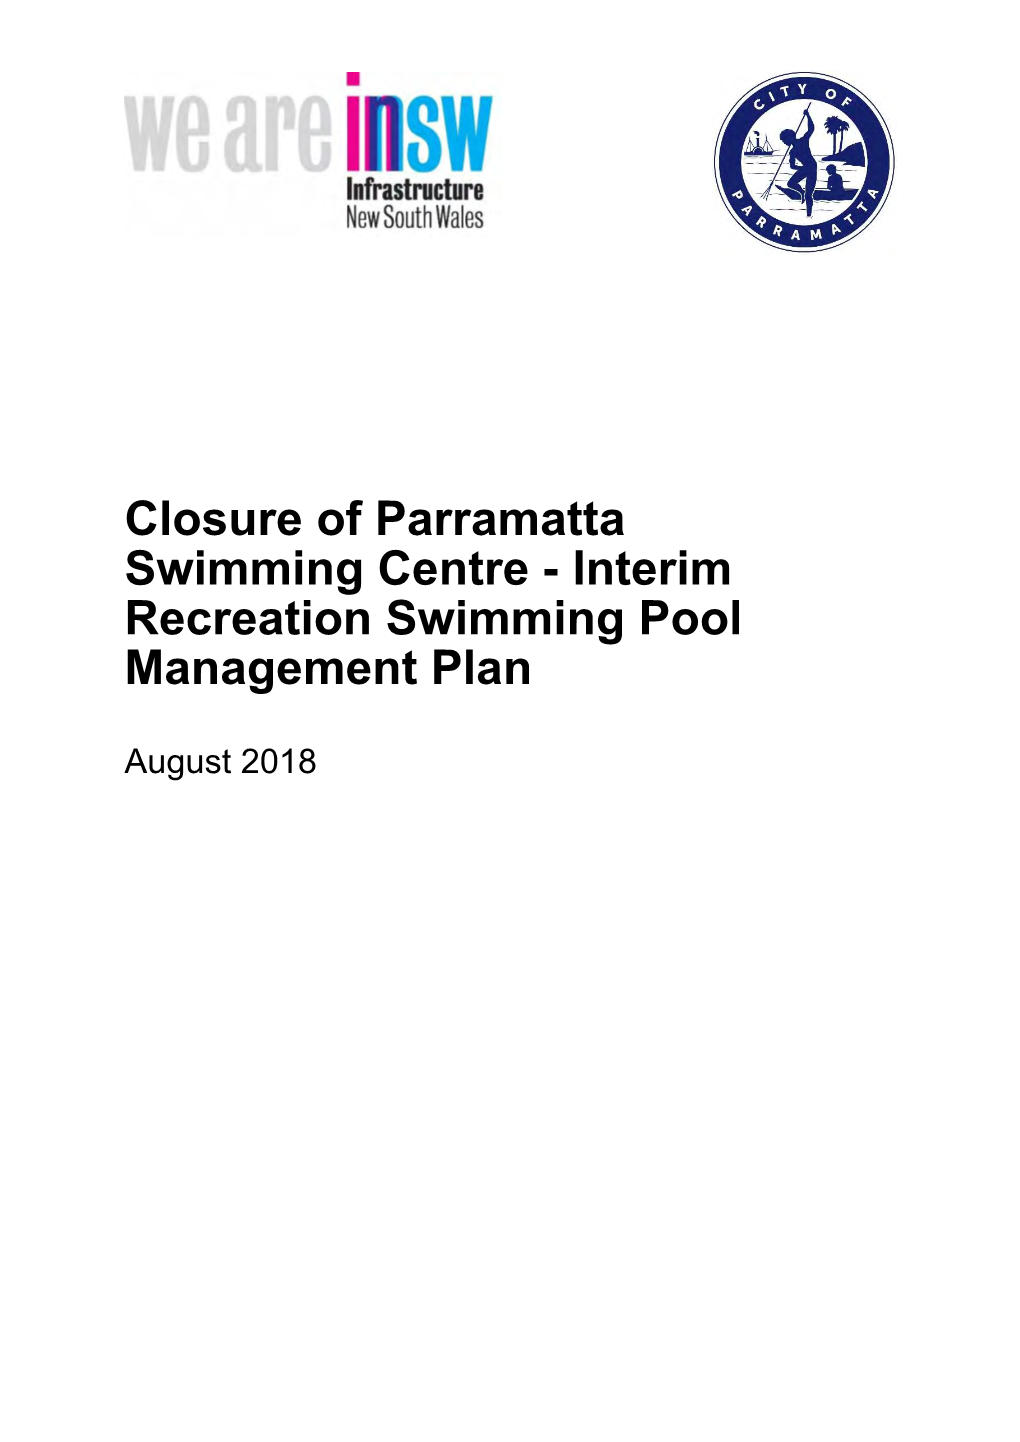 Interim Recreation Swimming Pool Management Plan